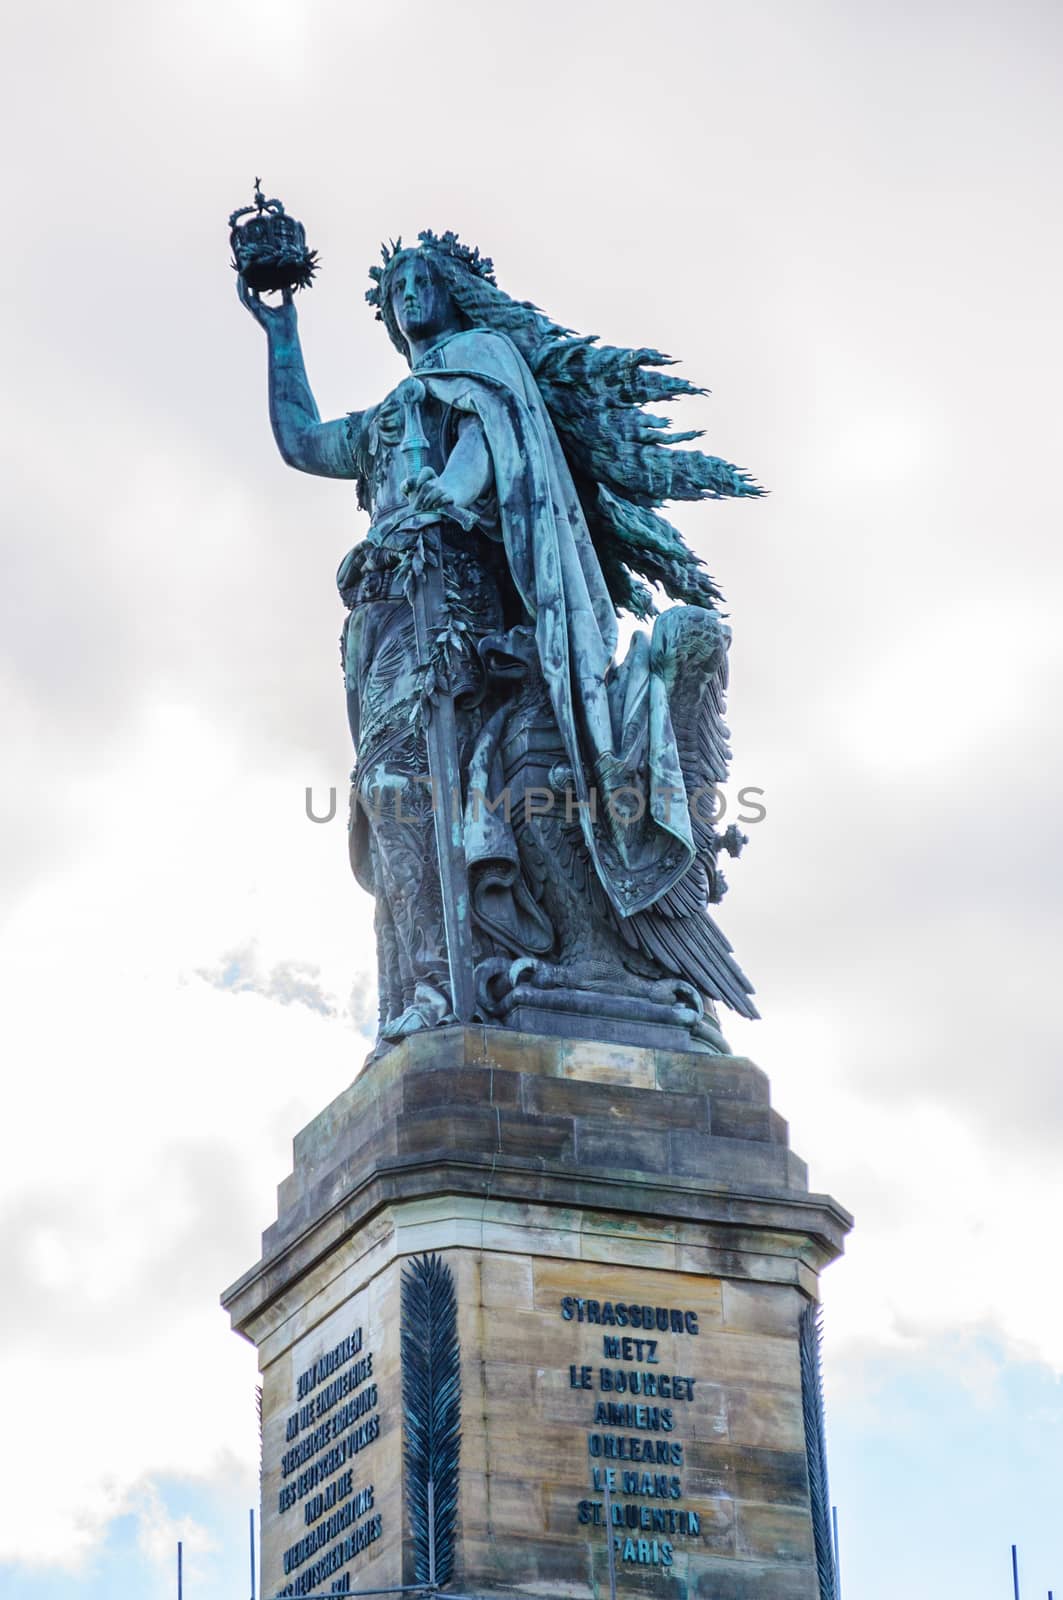 Niederwald monument, Ruedesheim, Rheinland-Pfalz, Germany by Eagle2308